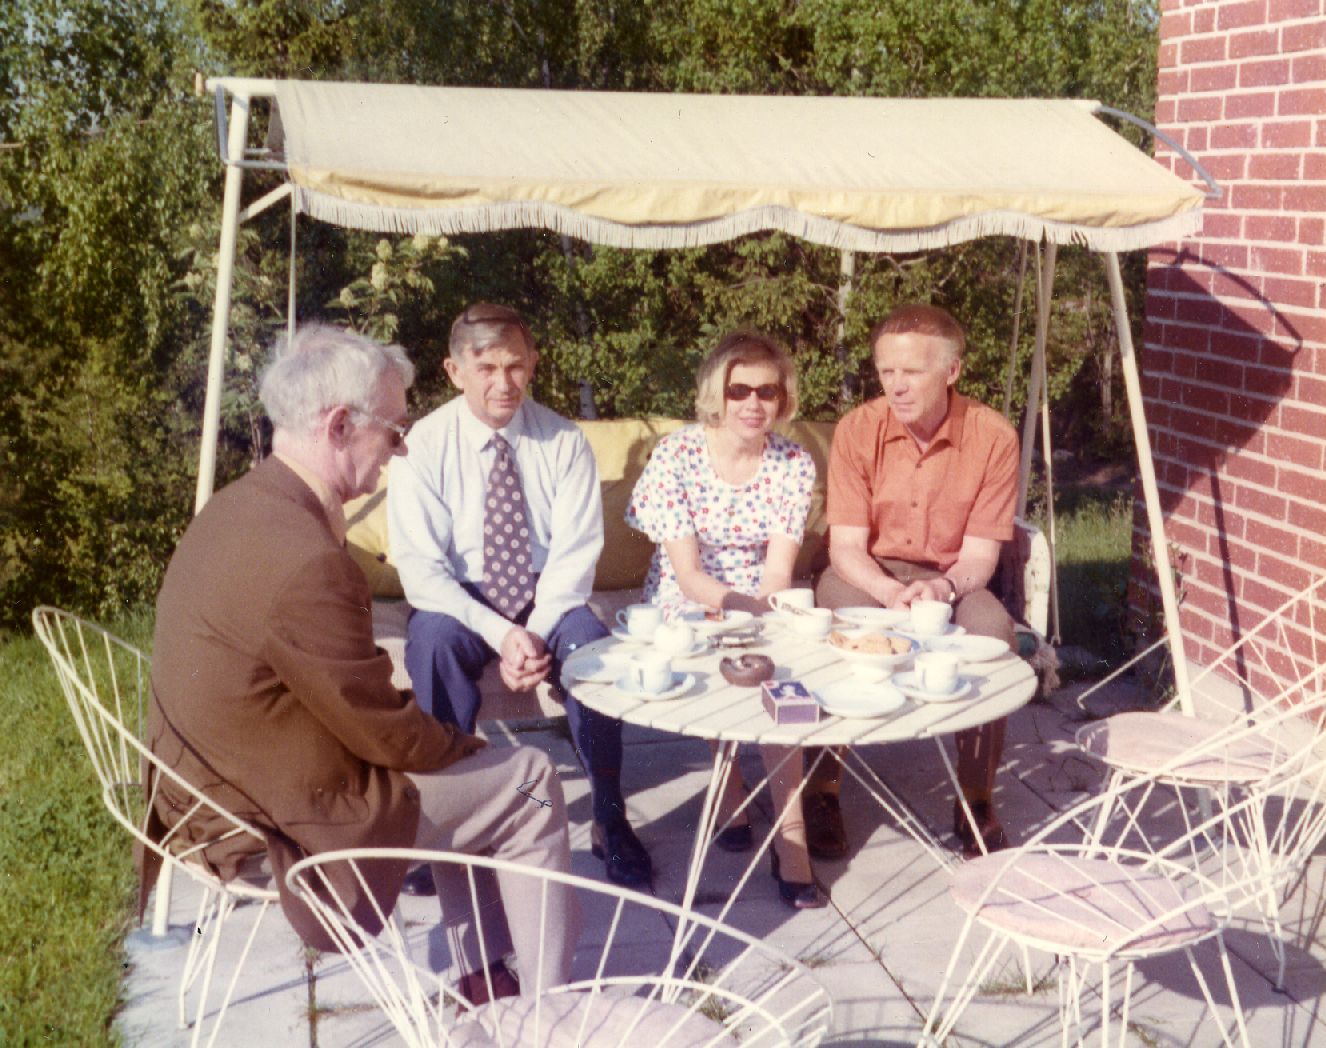 Arvo Mägi 60th birthday 1973 Karl Ristikivi, Arvi Moor and others at the coffee table